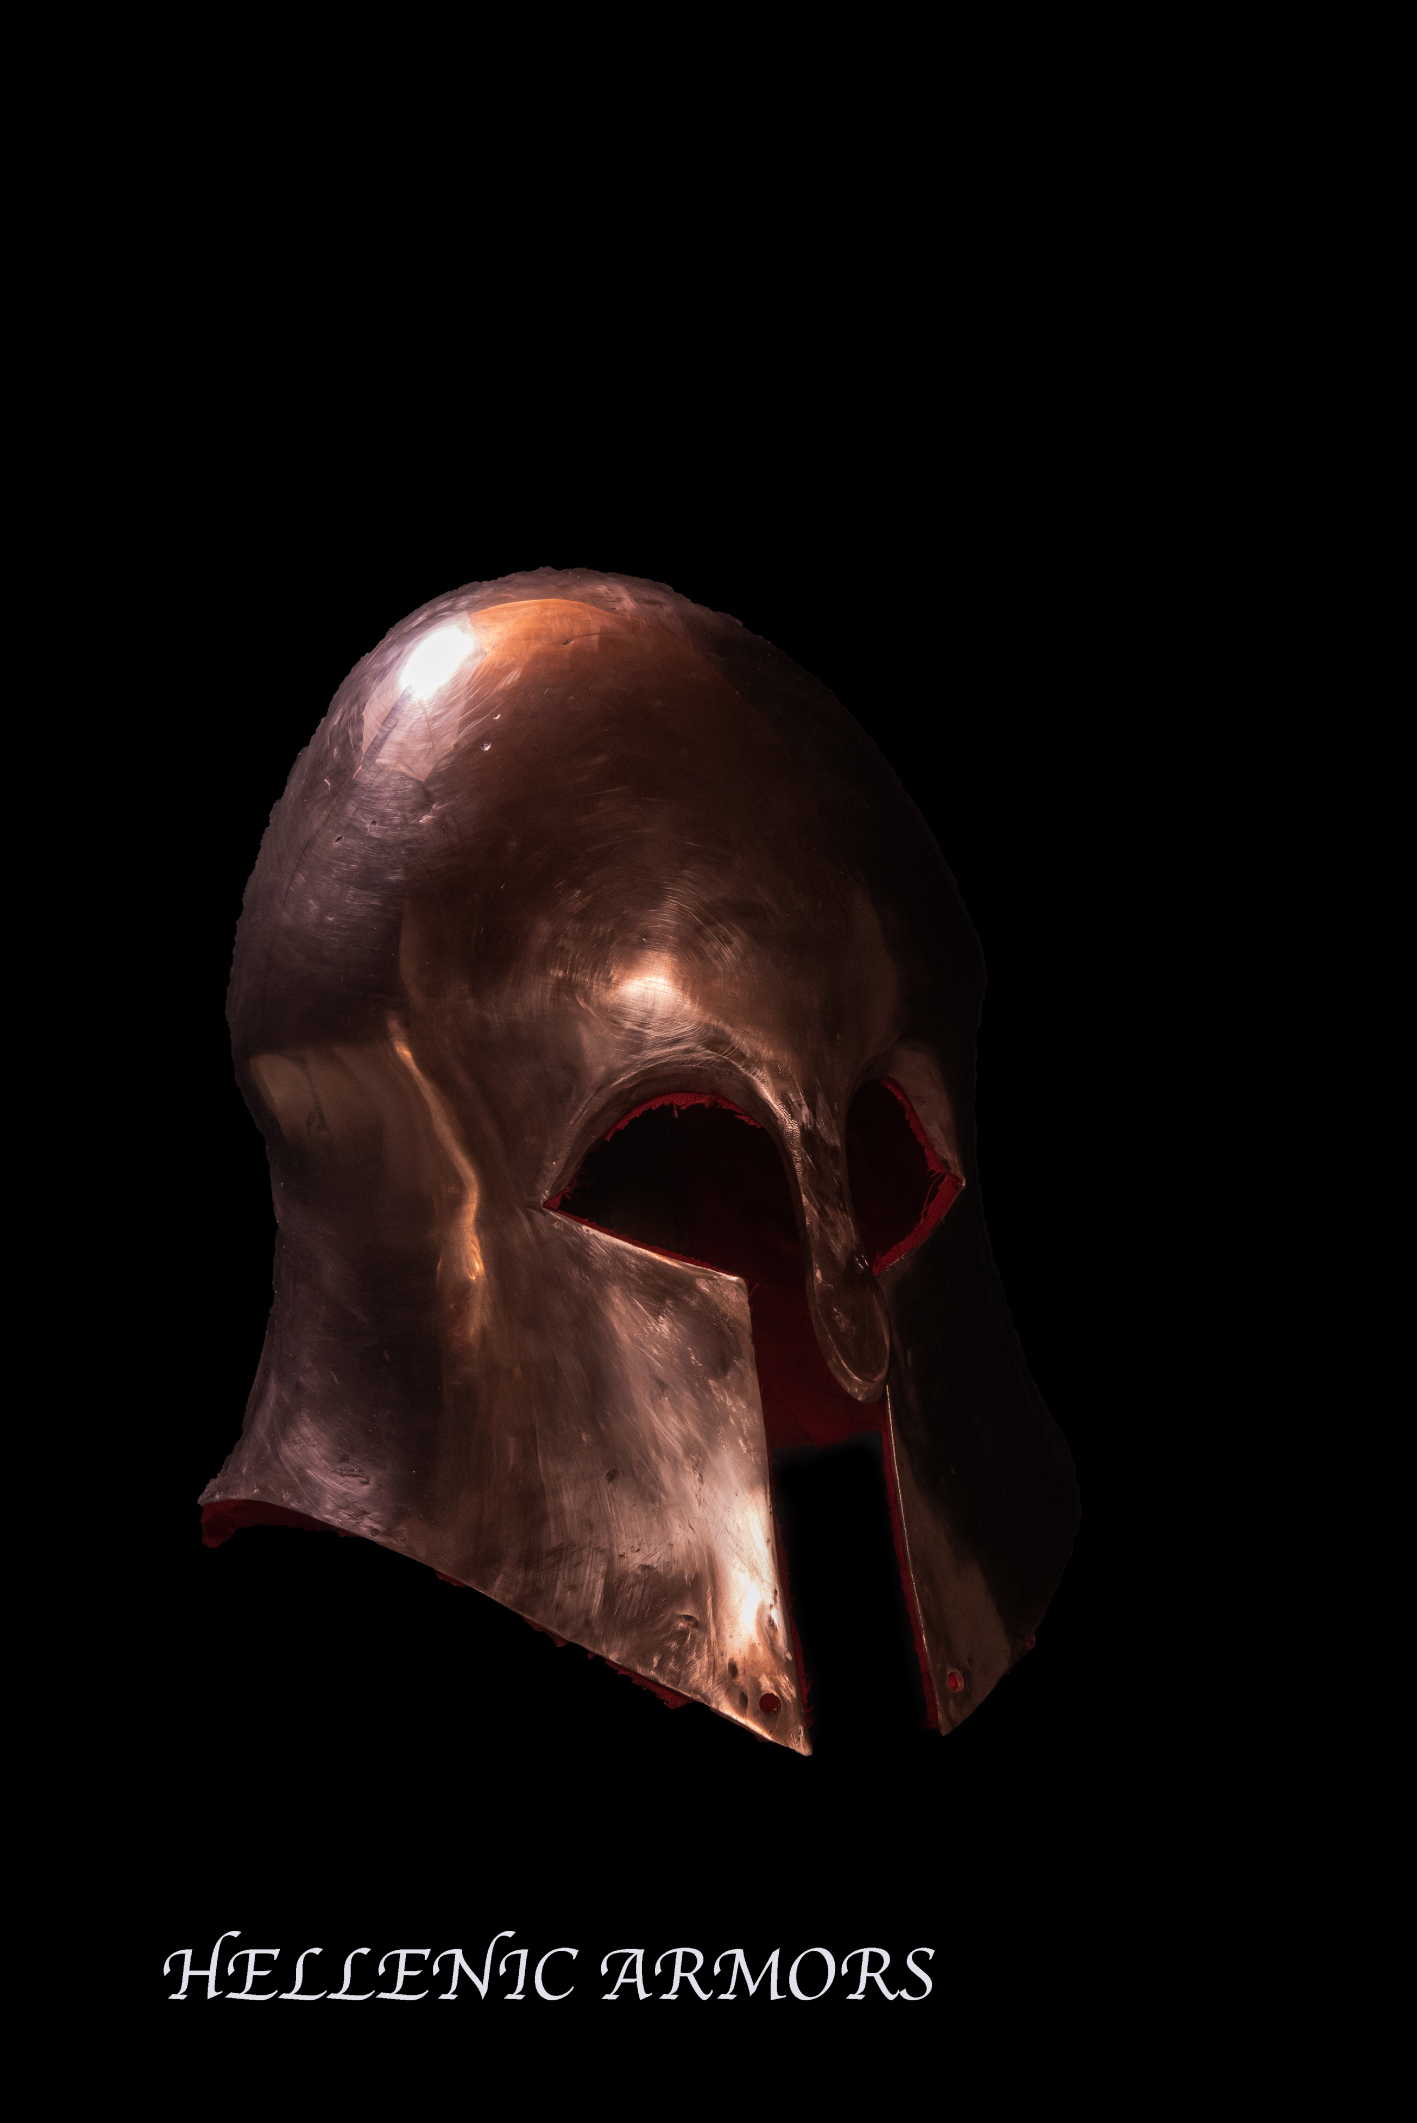 One piece Archaic Corinthian helmet